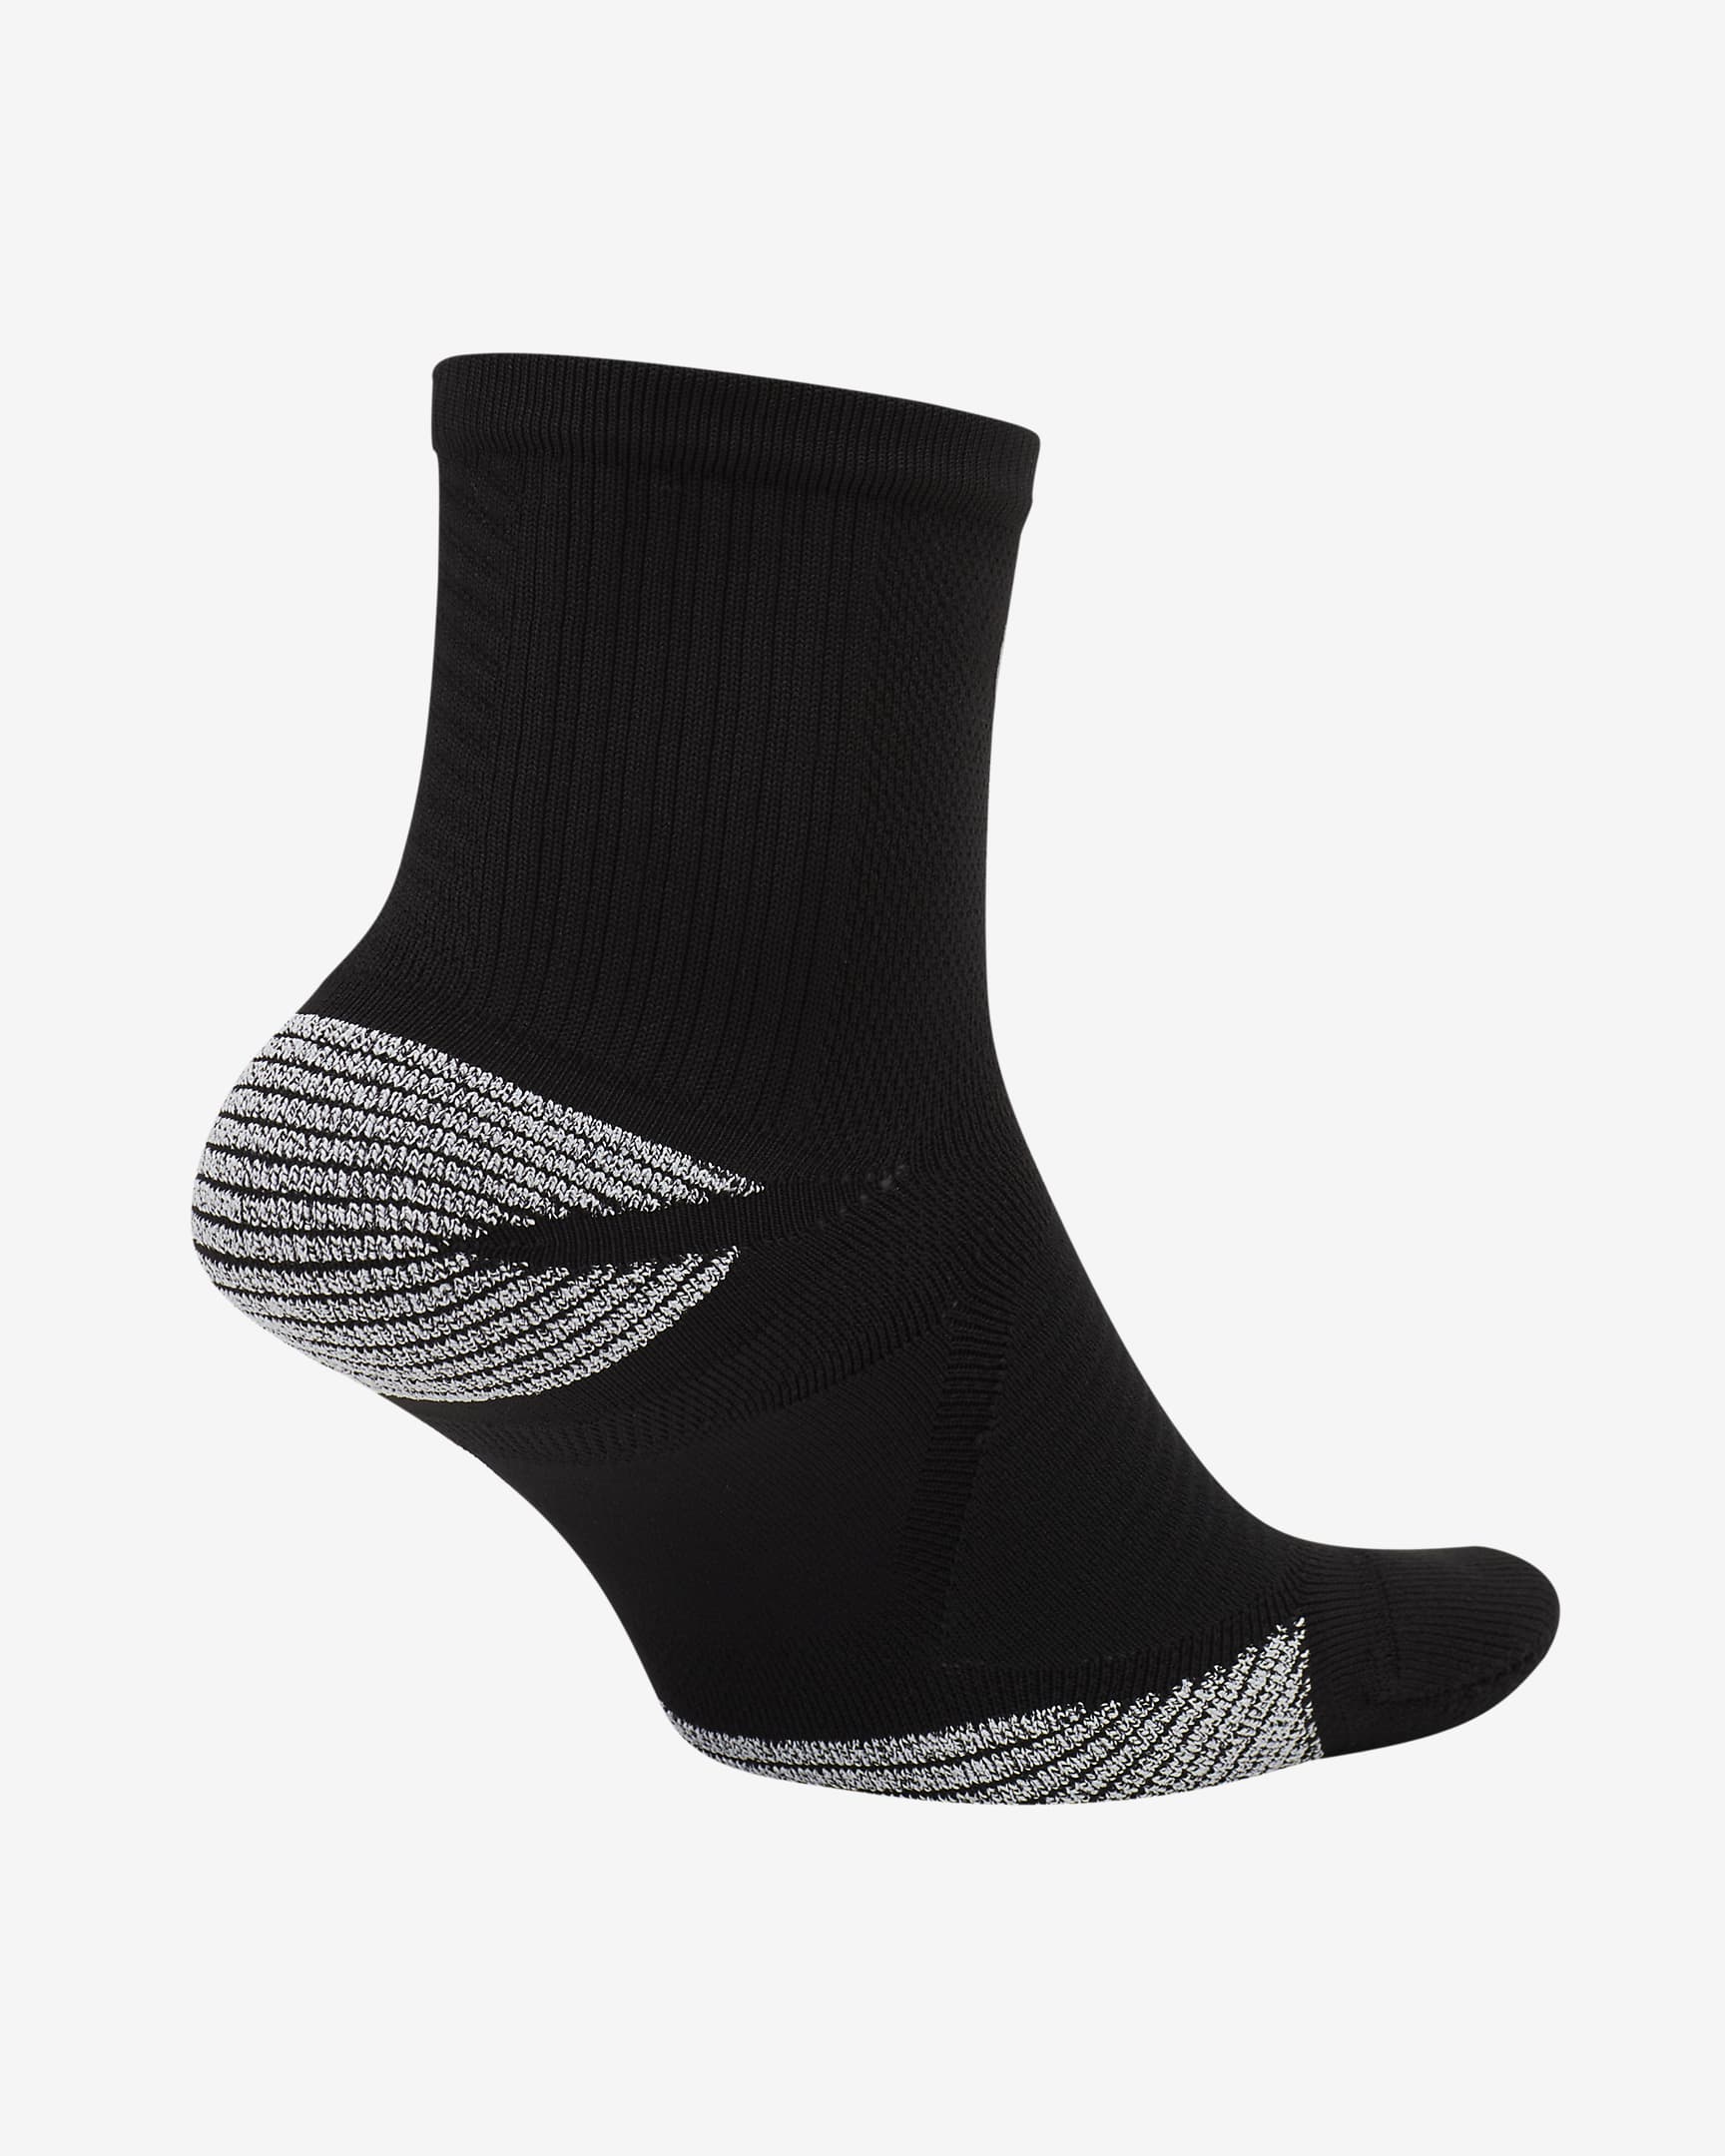 Nike Racing Ankle Socks. Nike CH